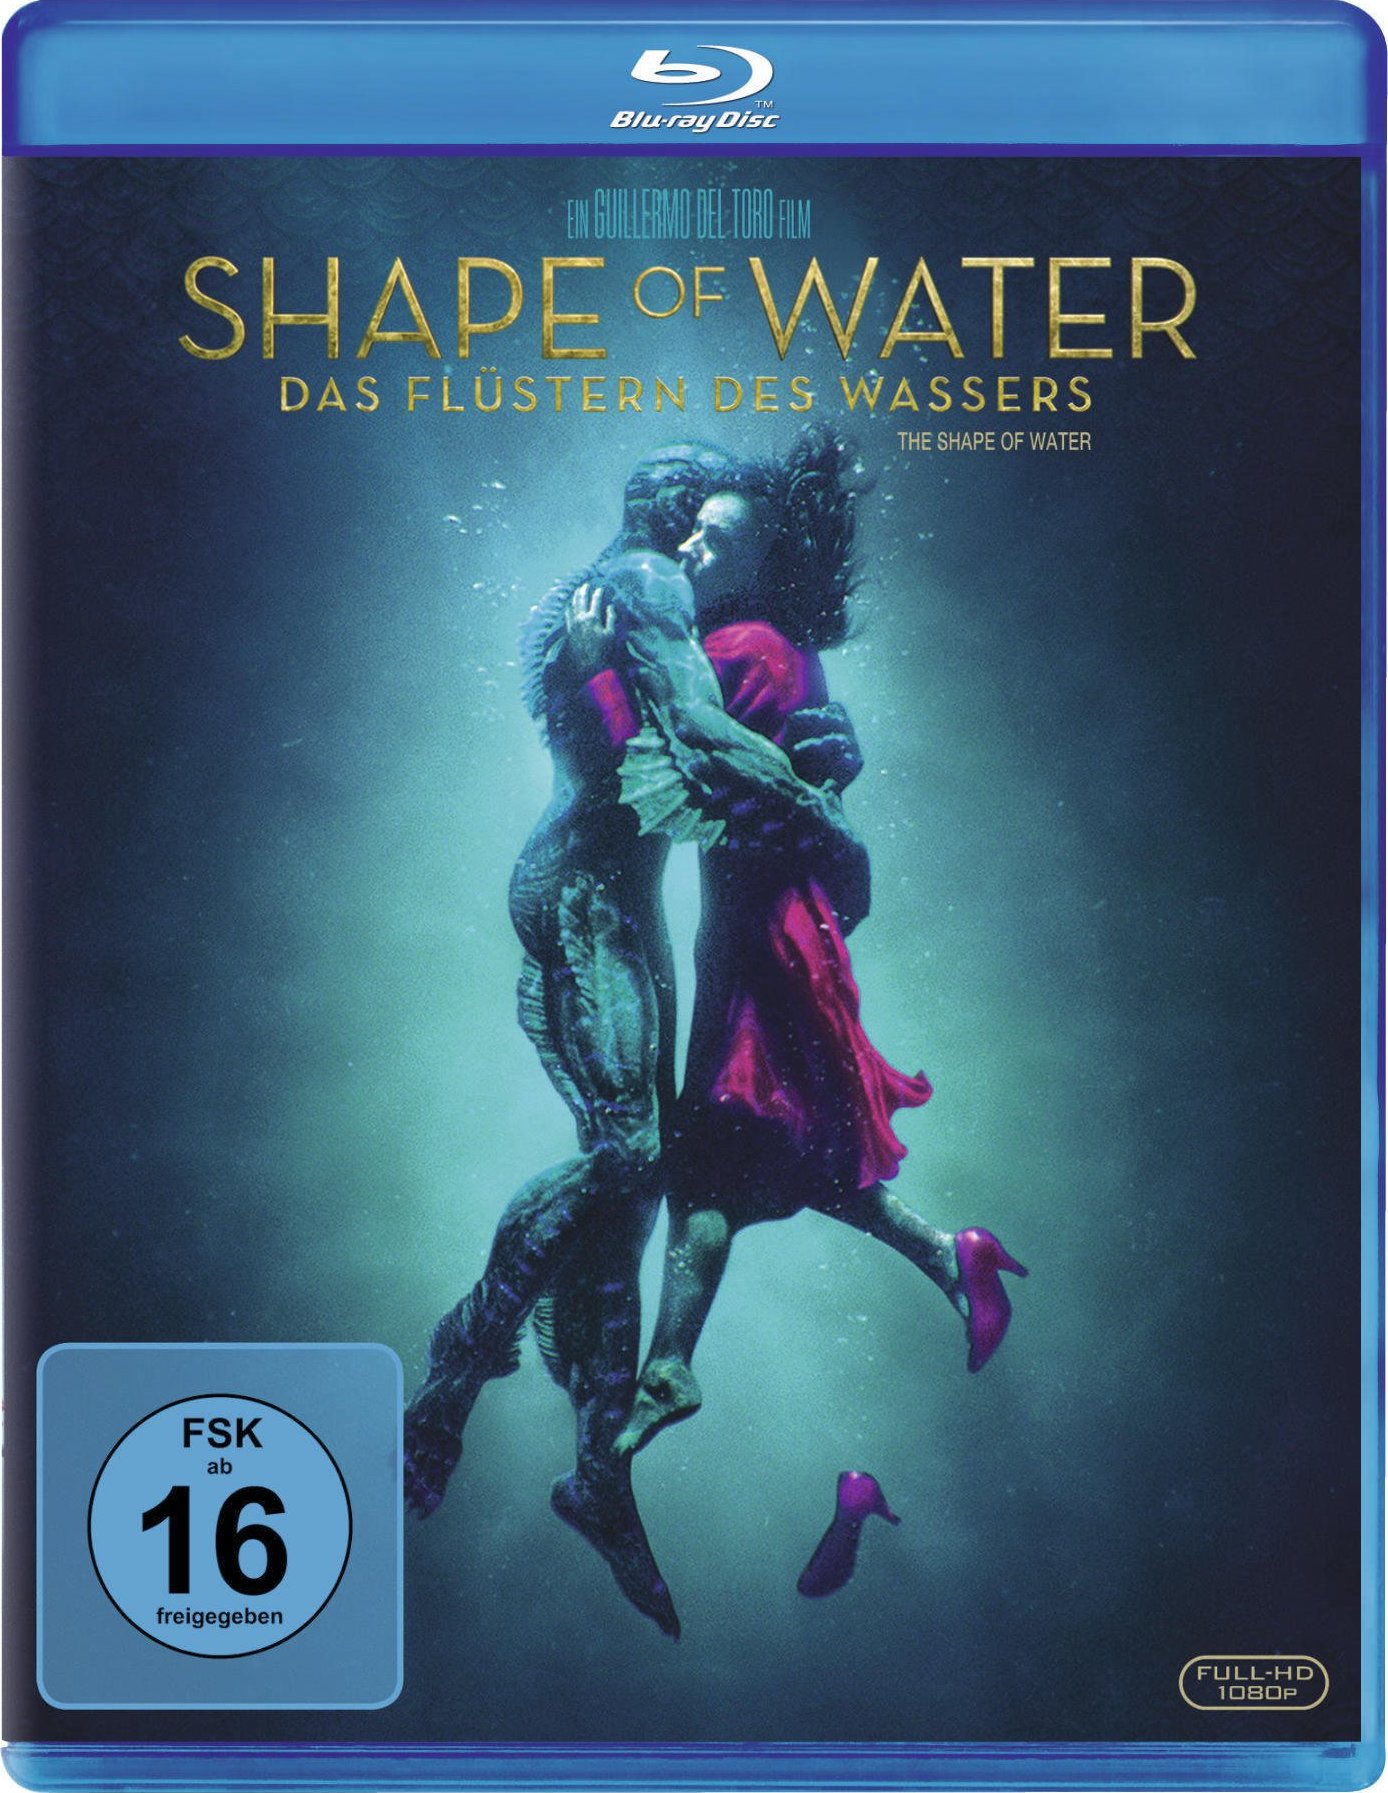 [水形物语]「CEE原盘中字」.The.Shape.of.Water.2017.CEE.BluRay.1080p.AVC.DTS-HD.MA.5.1-TTG   41.54G